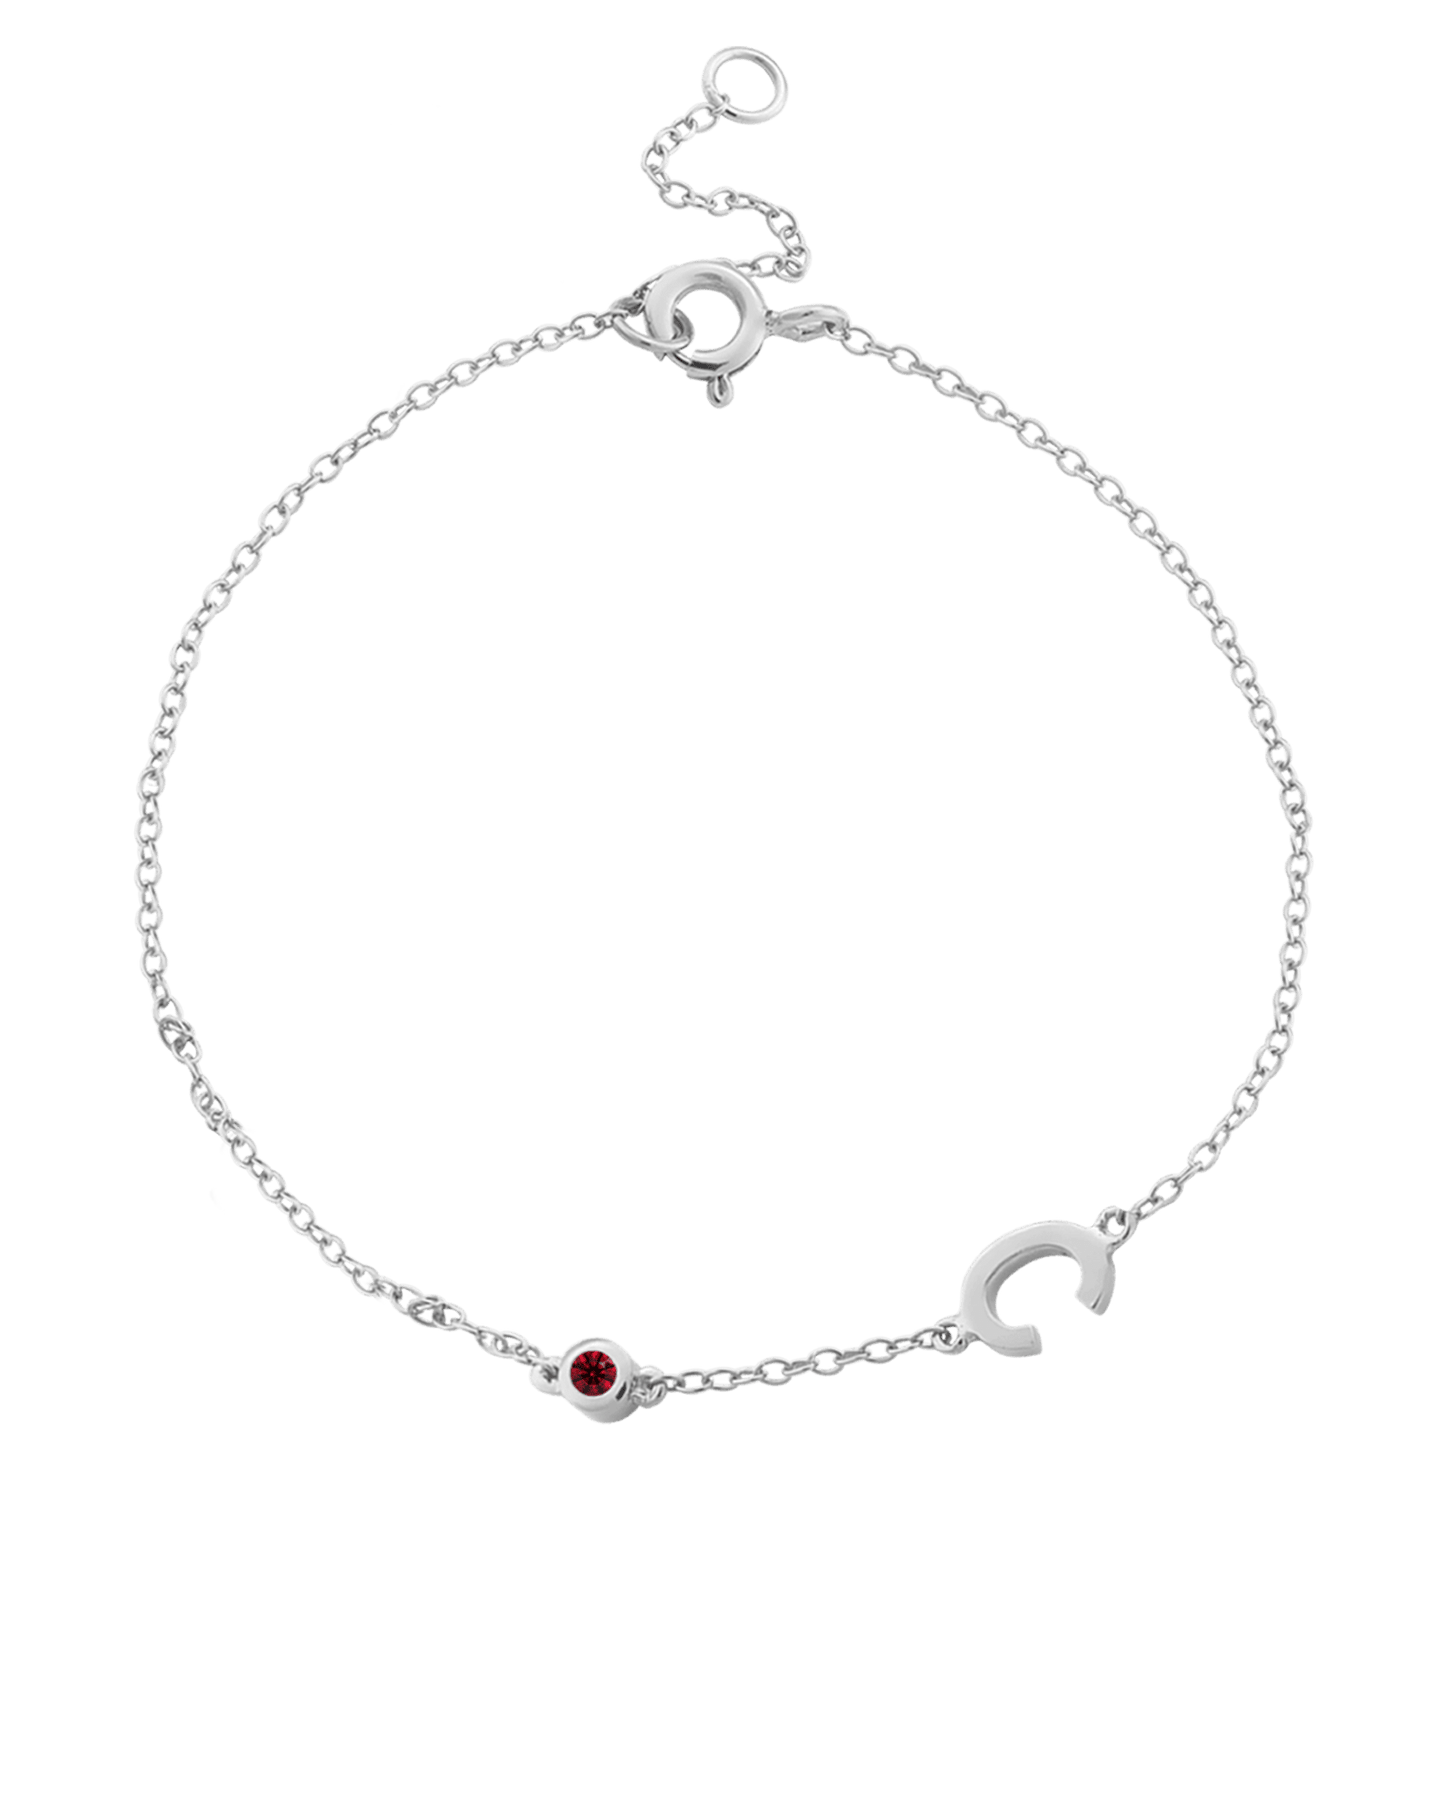 The Initial Birthstone Bracelet - 925 Sterling Silver Bracelets magal-dev 